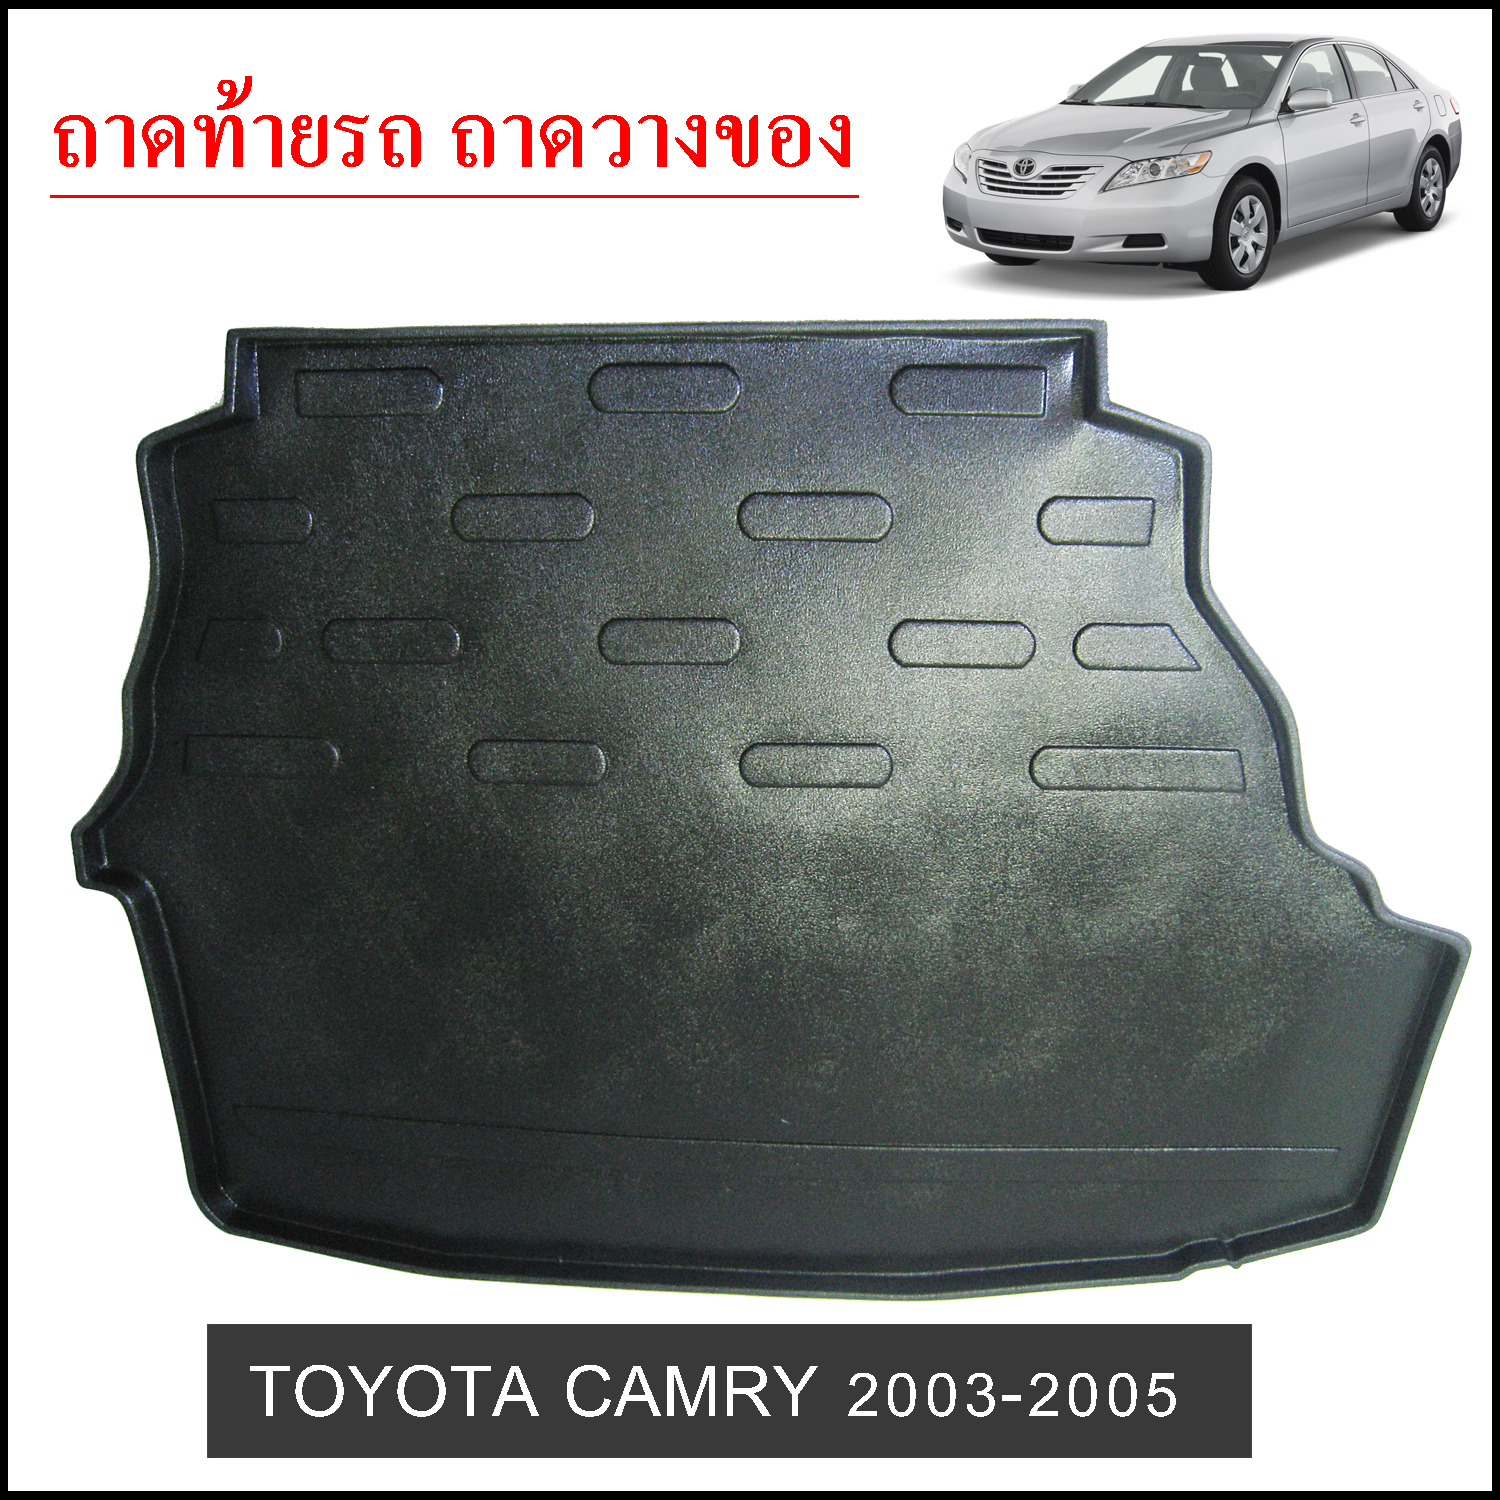 Toyota Camry 2003-2005